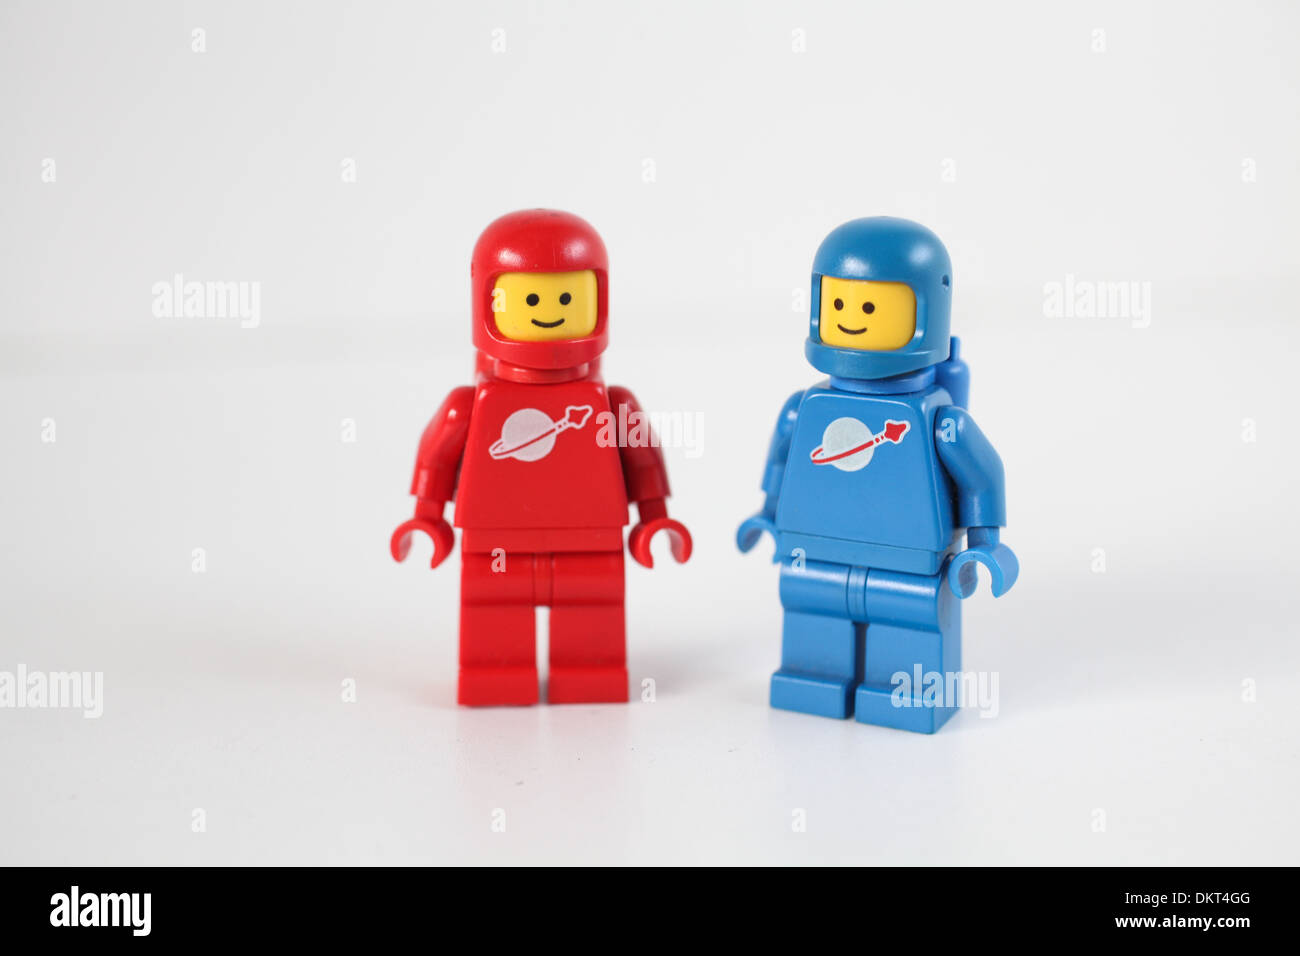 lego space figures Stock Photo